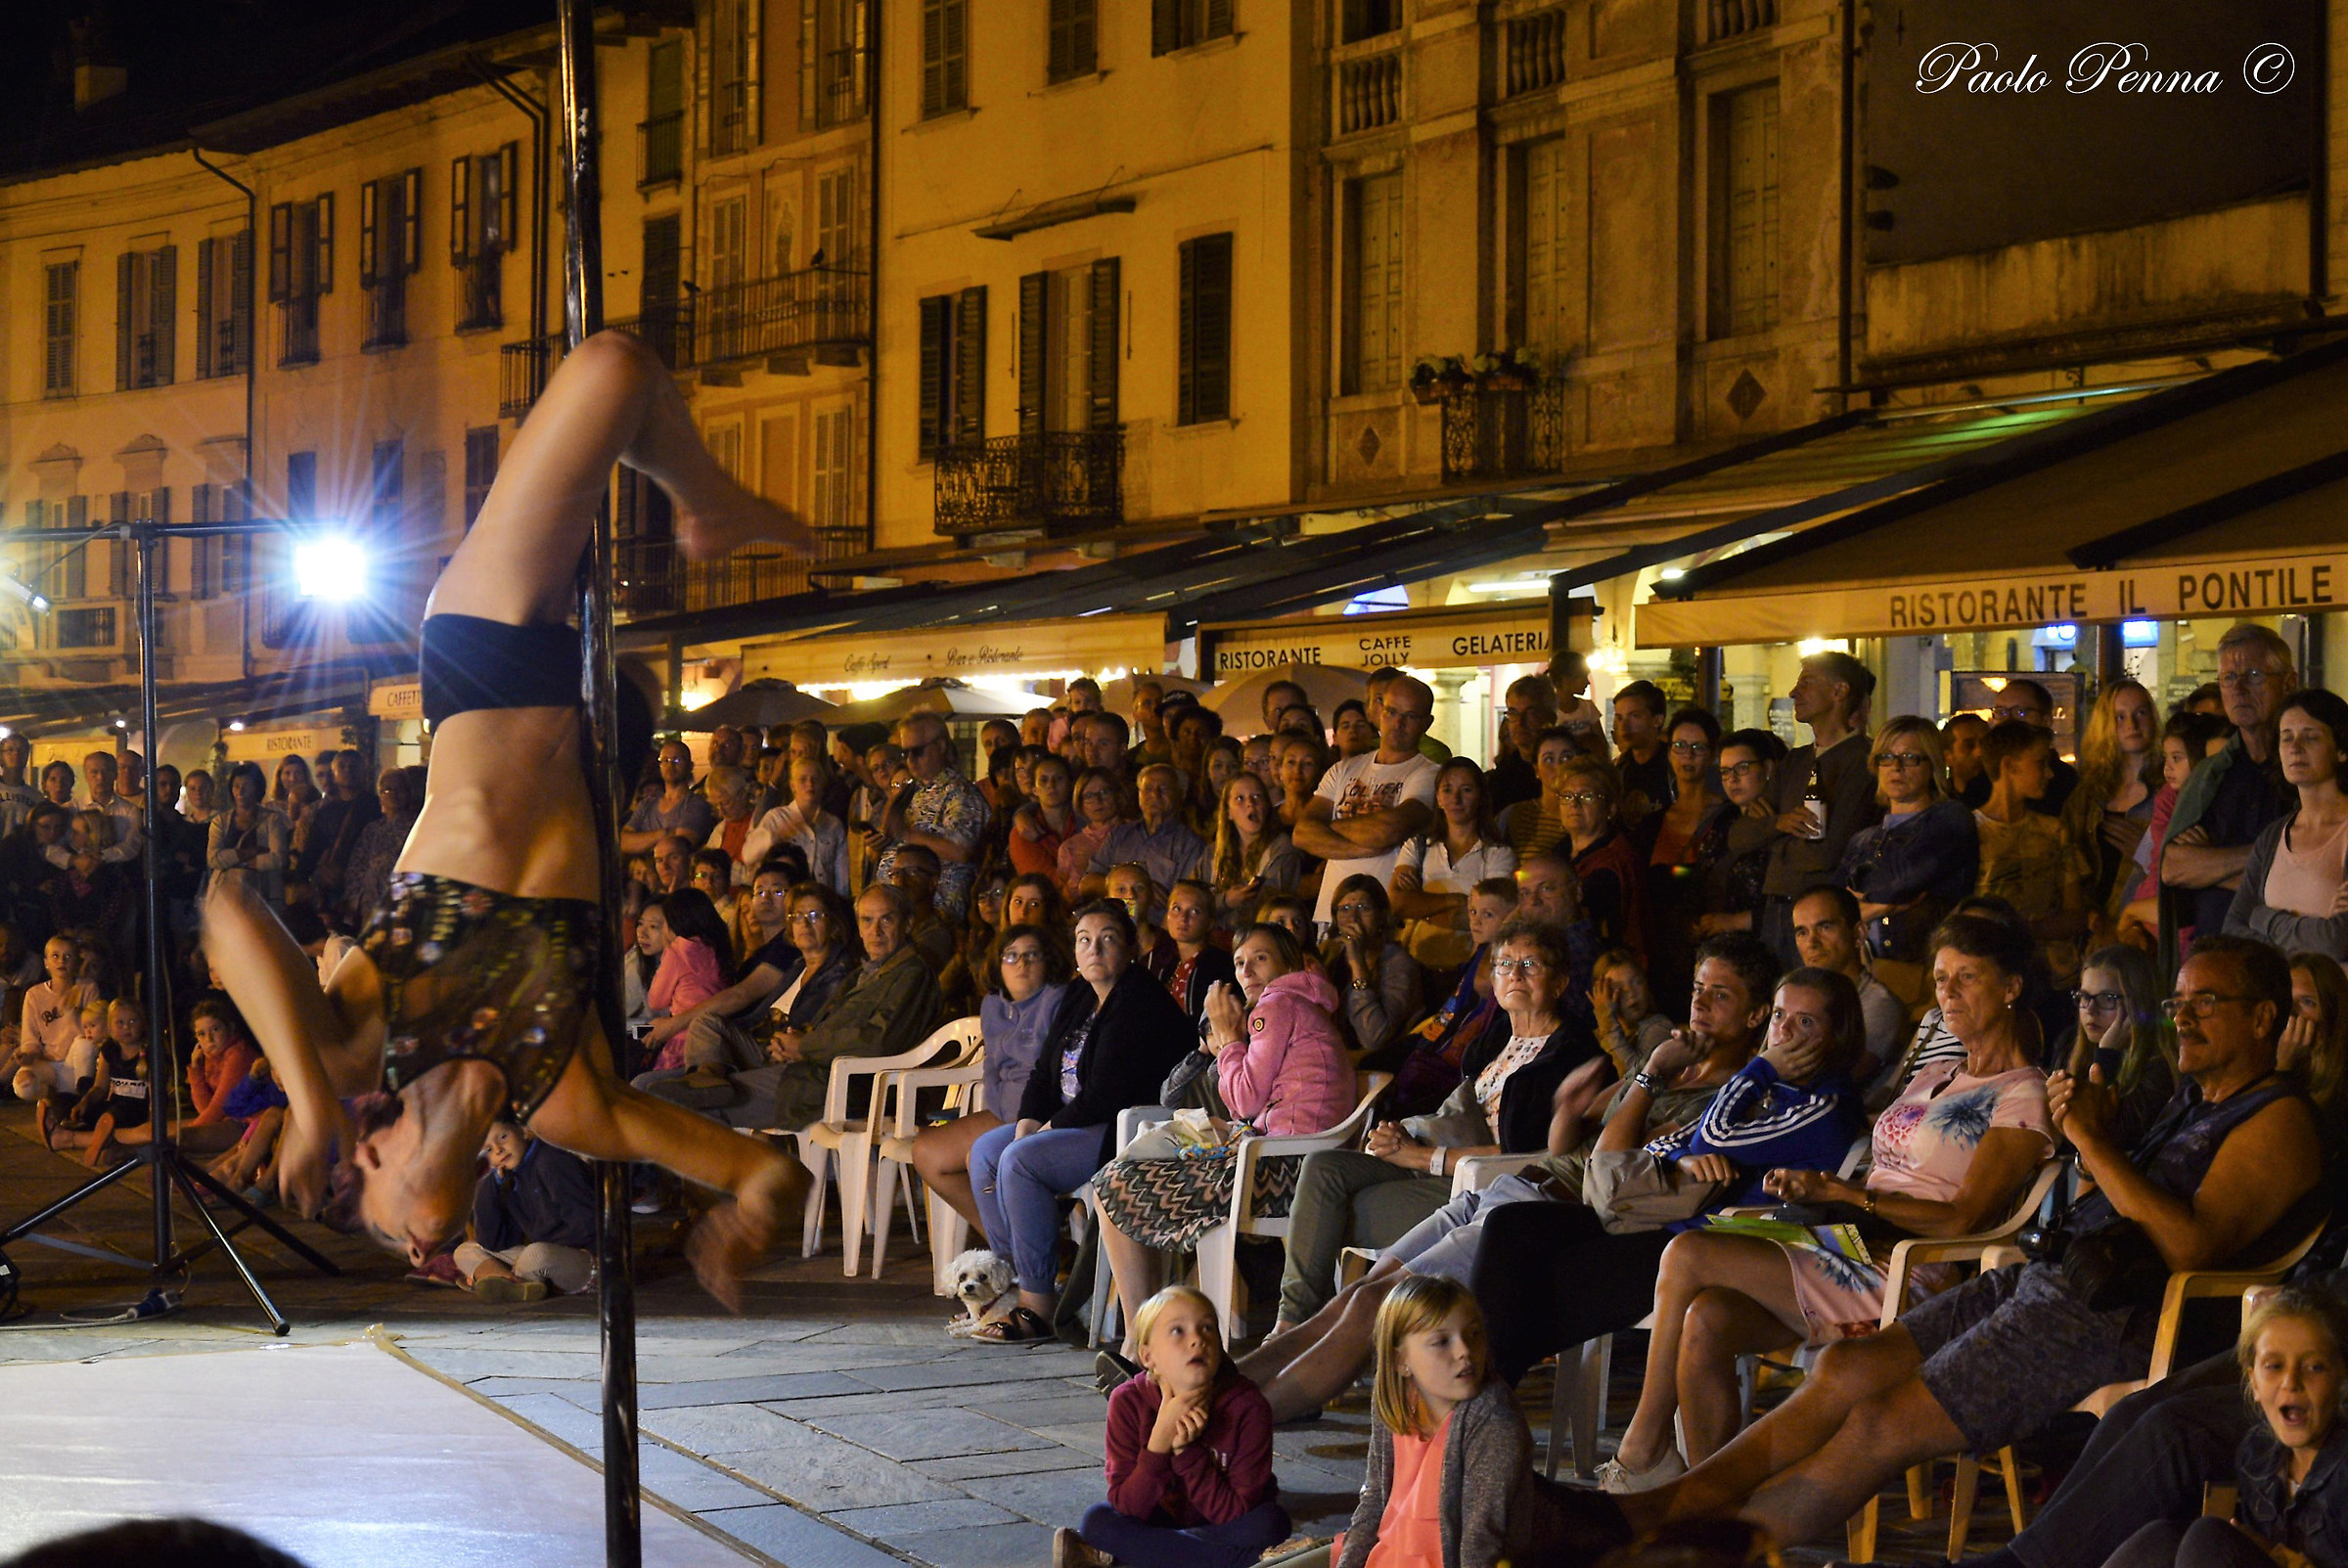 Pole dance in piazza...